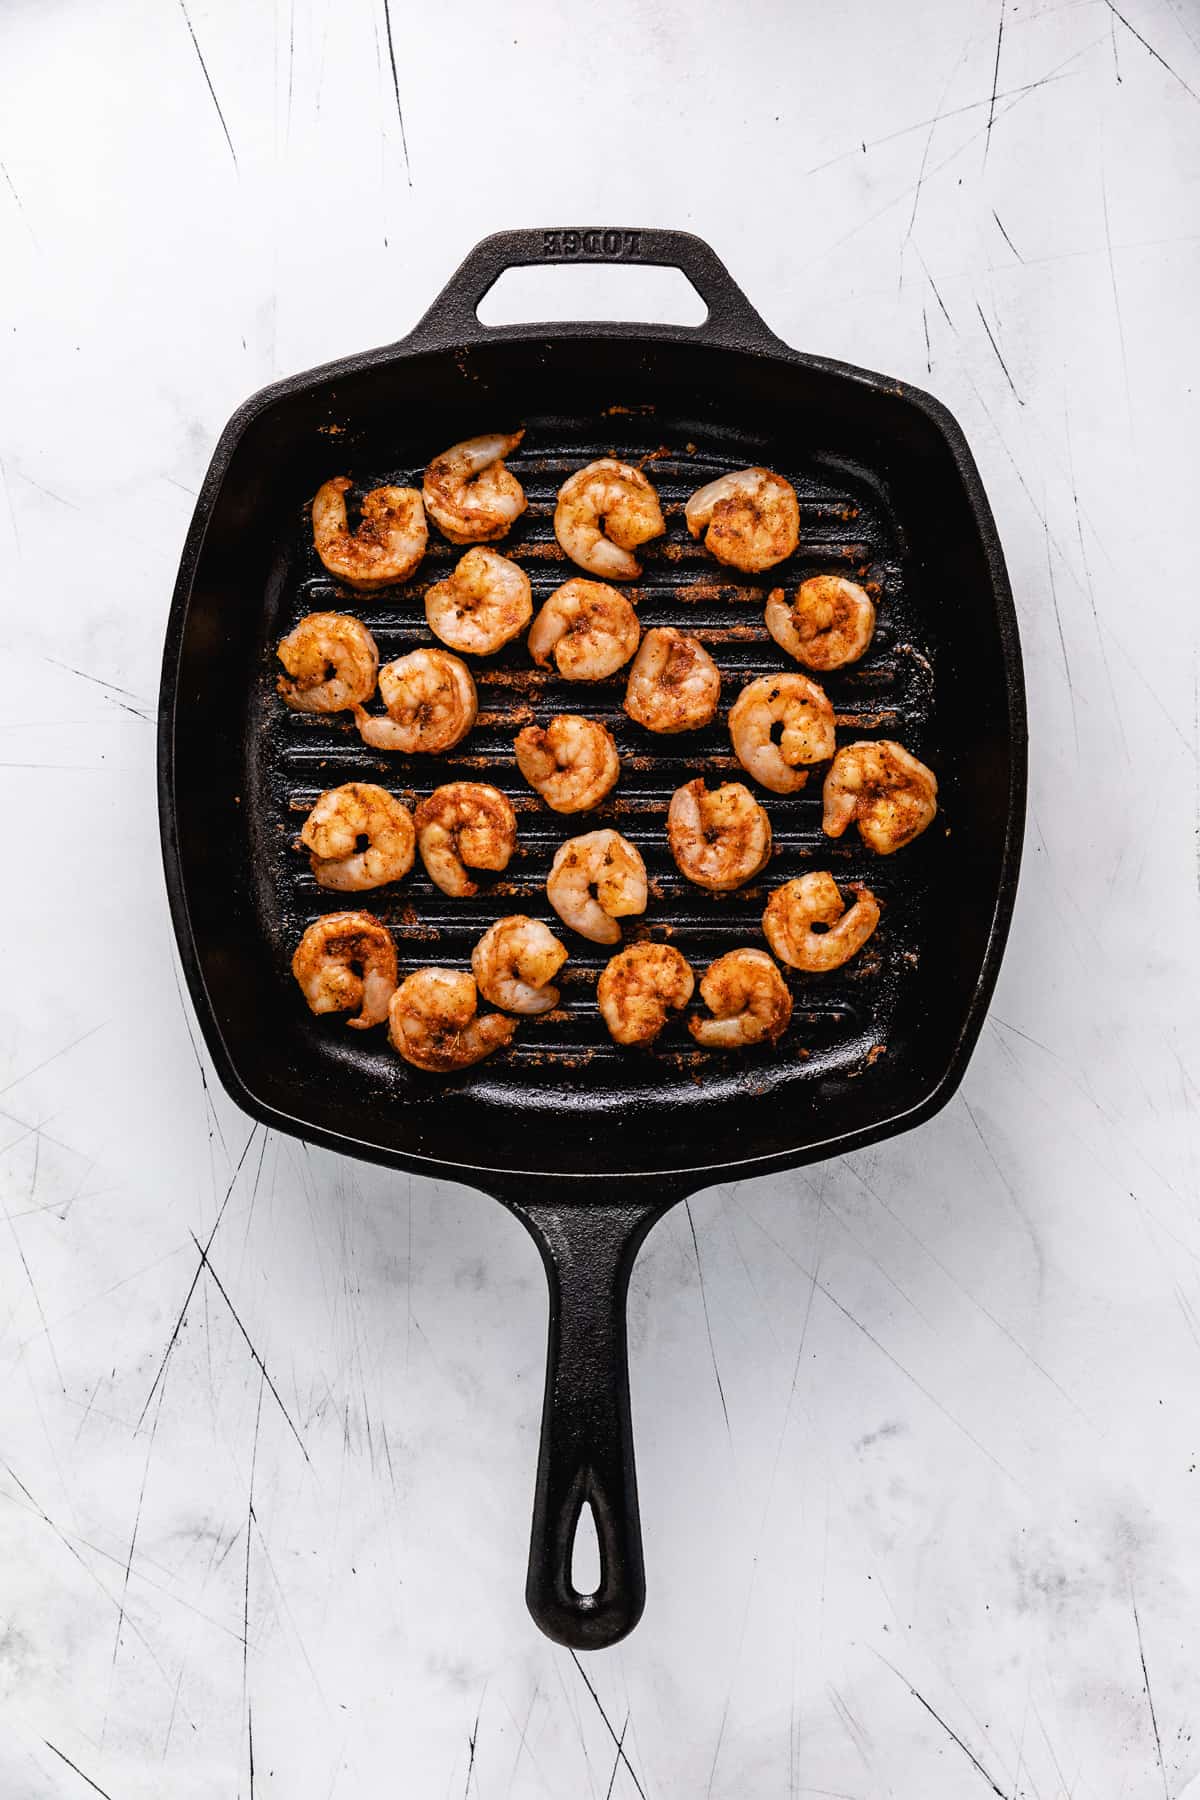 Shrimp cooking on a griddle pan.